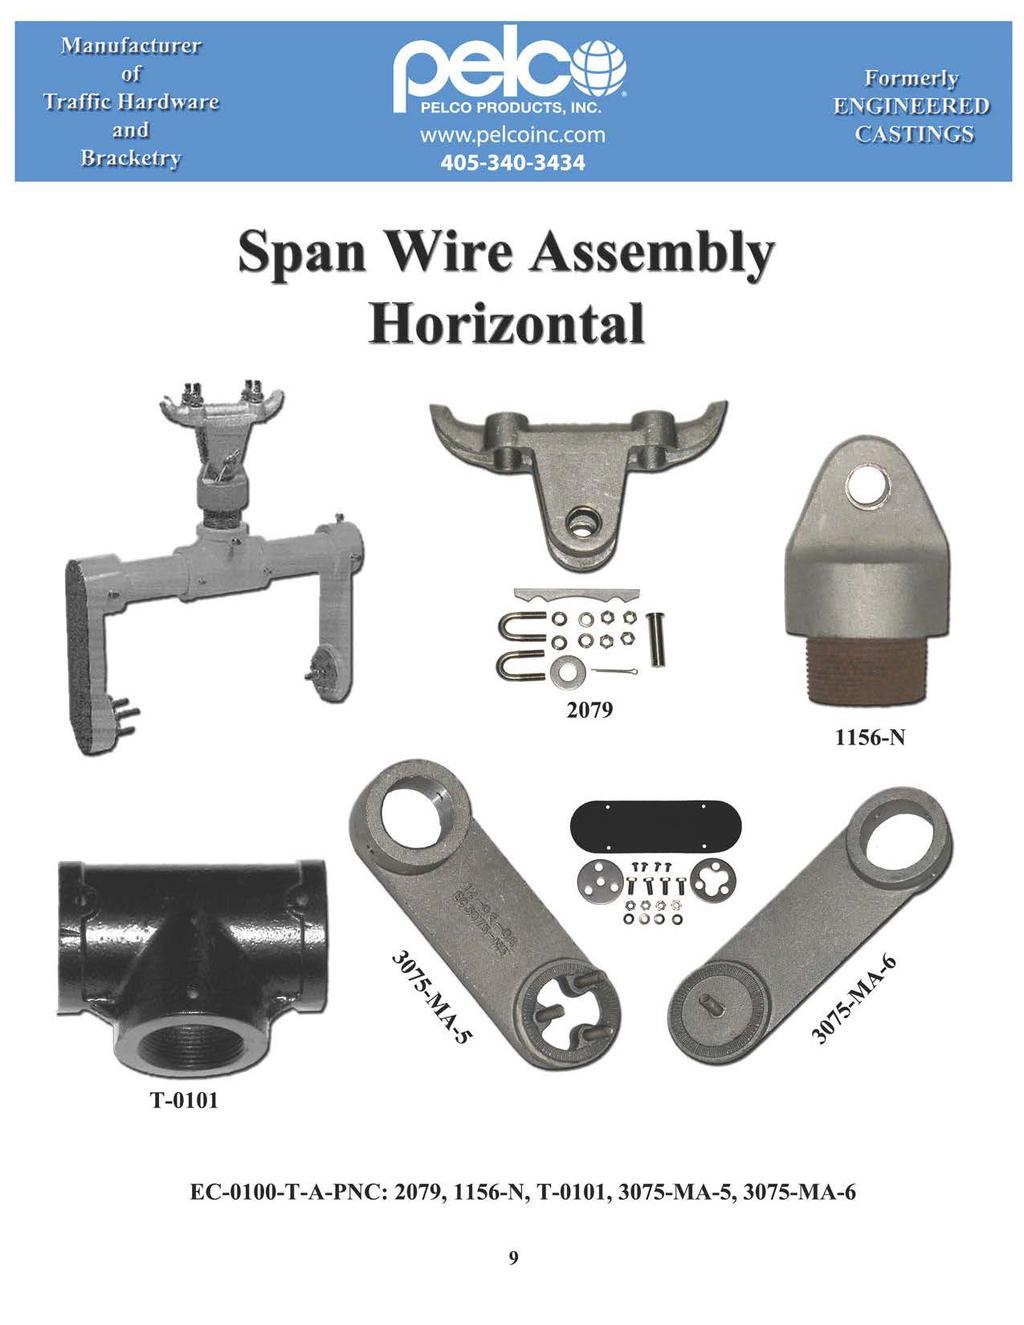 Manufactur;er Span Wire Assembly Horizontal p:== o o oo l '=== o ooo C ---o 279